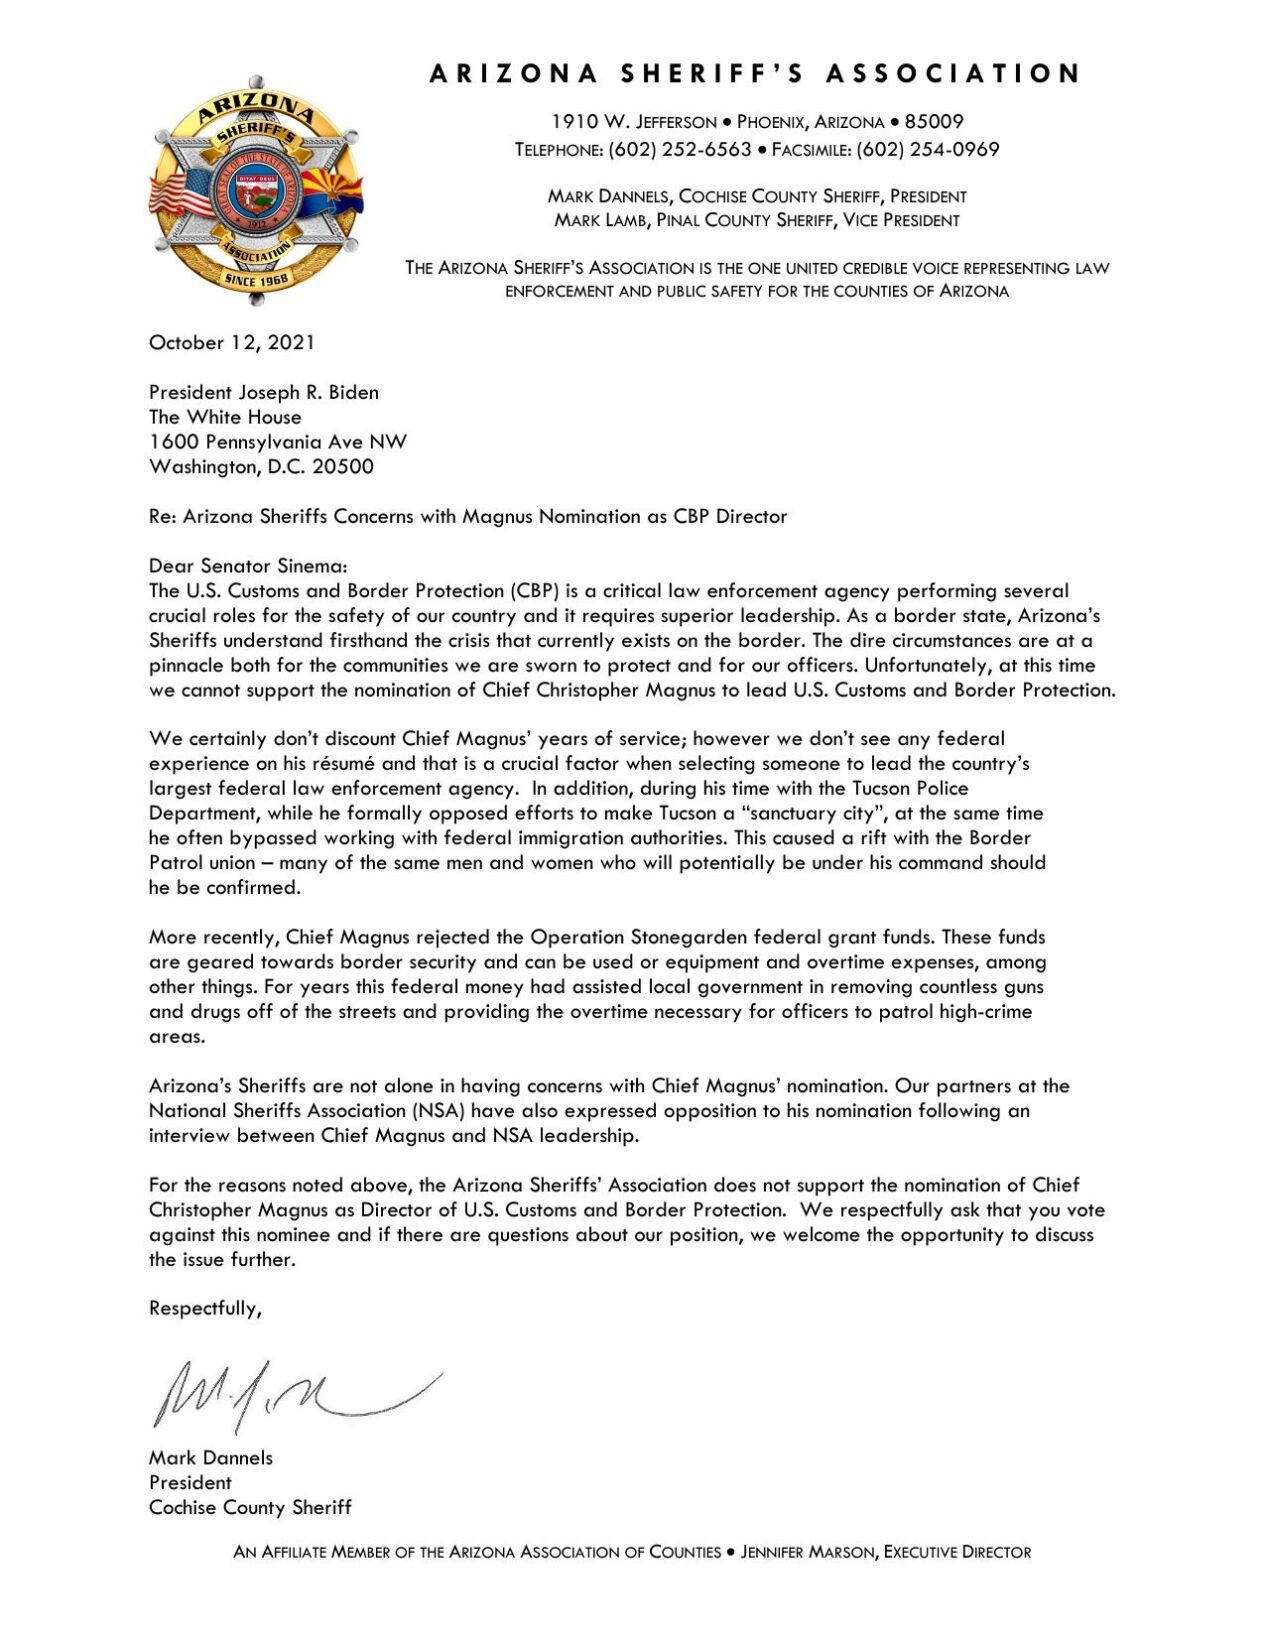 Arizona Sheriff's Association Magnus Nomination Concerns